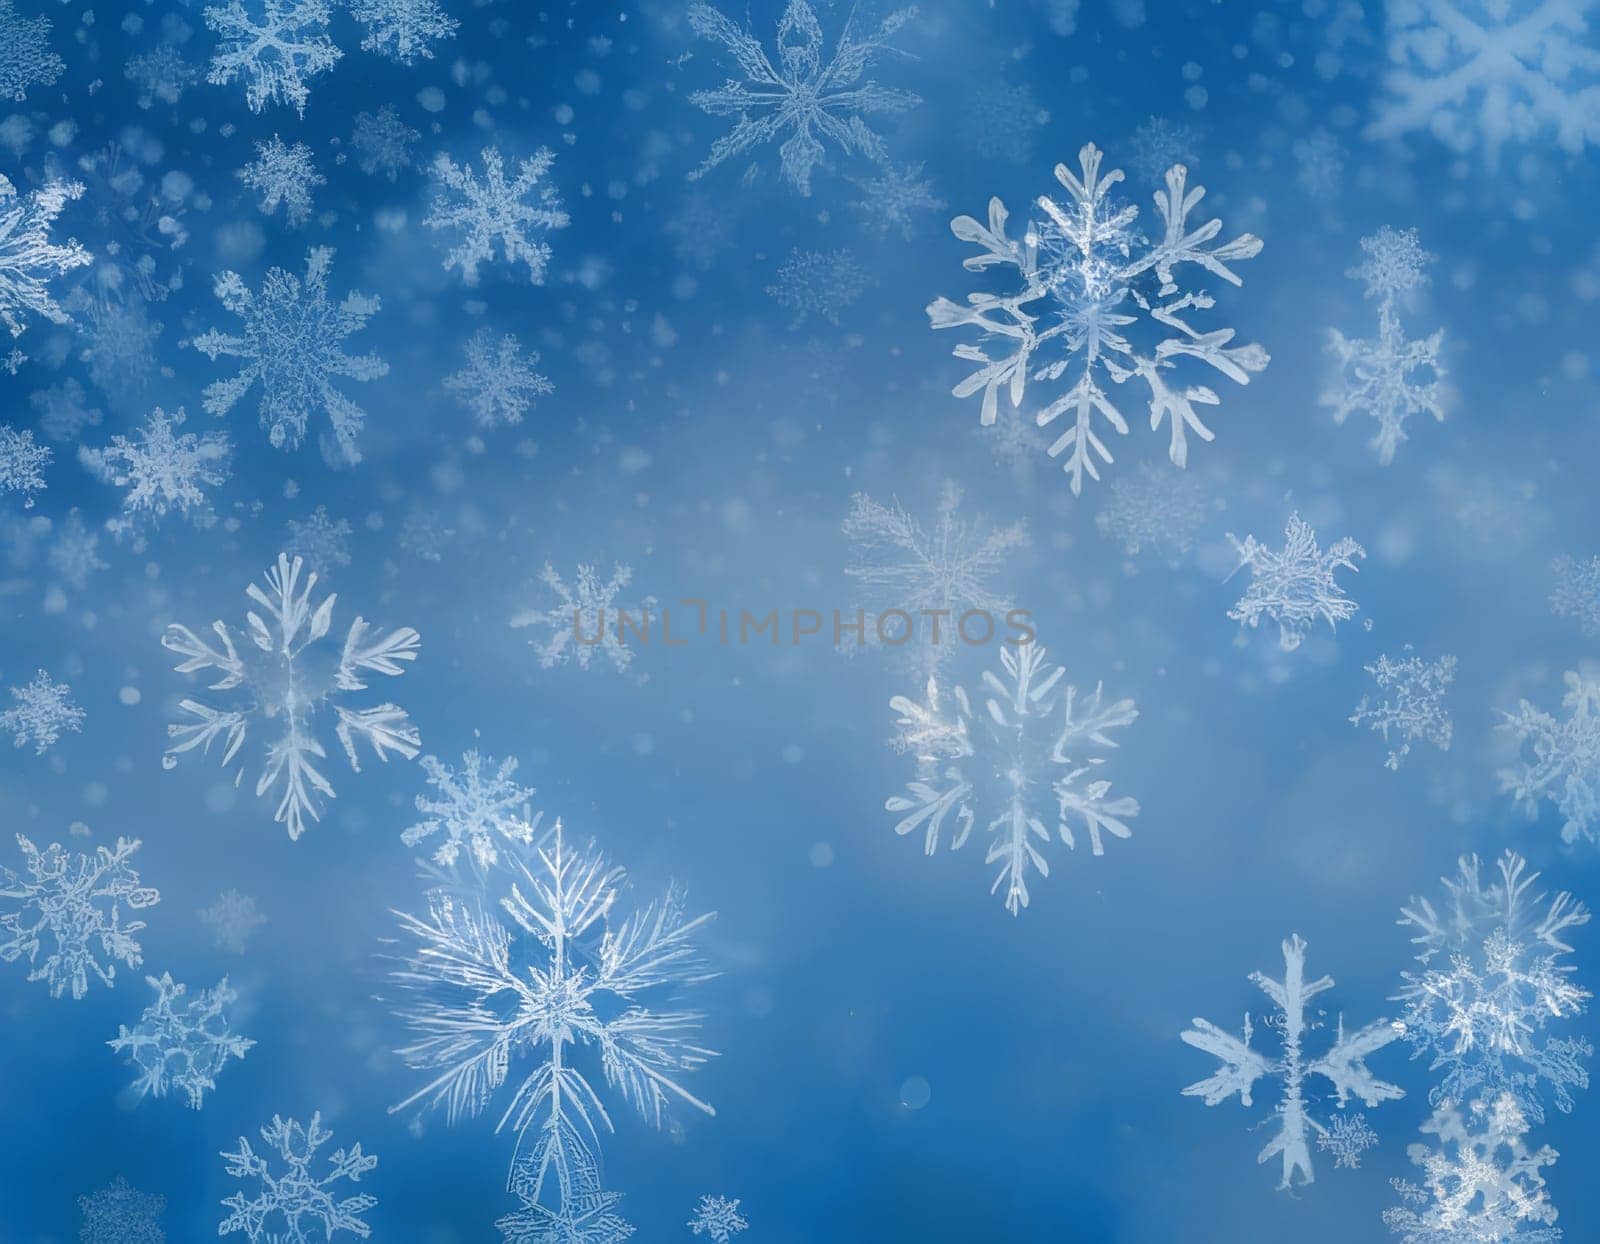 Snow background by WielandTeixeira